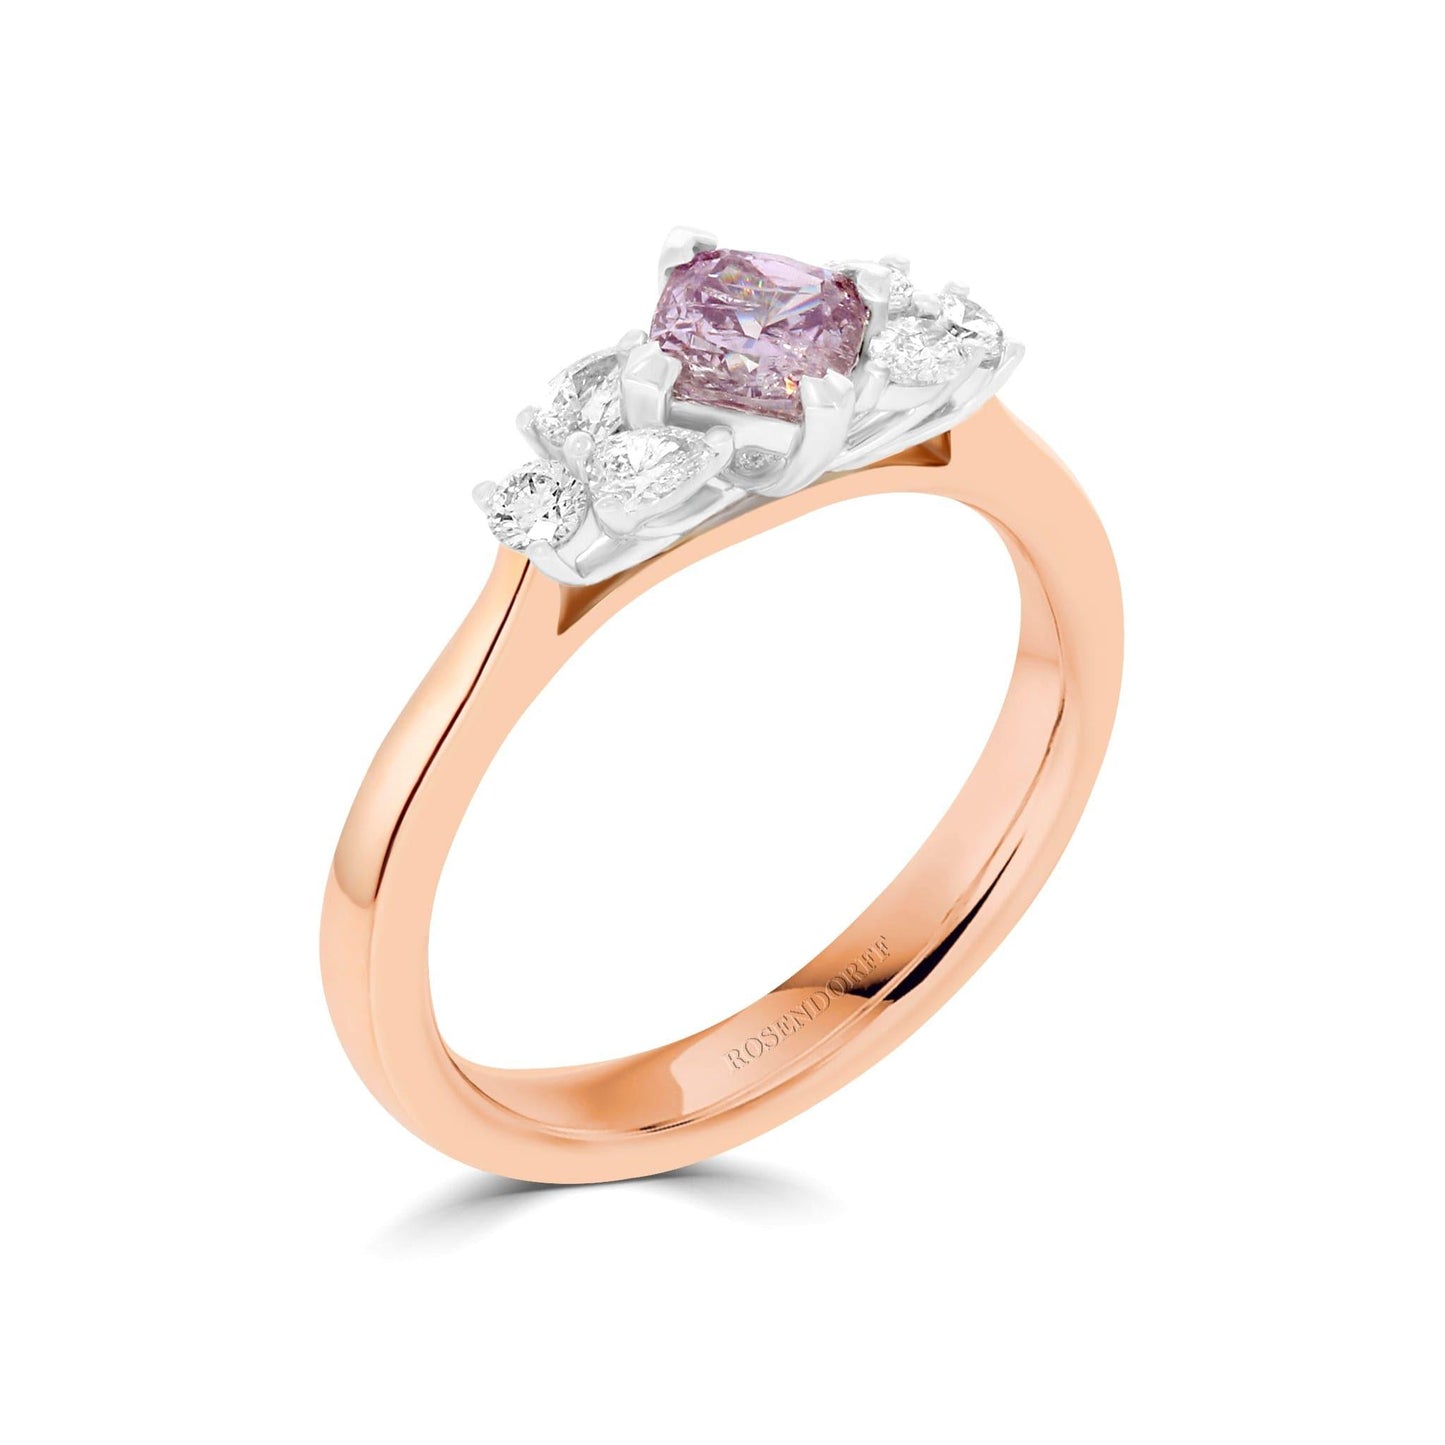 Incredible 0.50ct Fancy Intense Purple Pink Diamond Ring - Rosendorff Diamond Jewellers